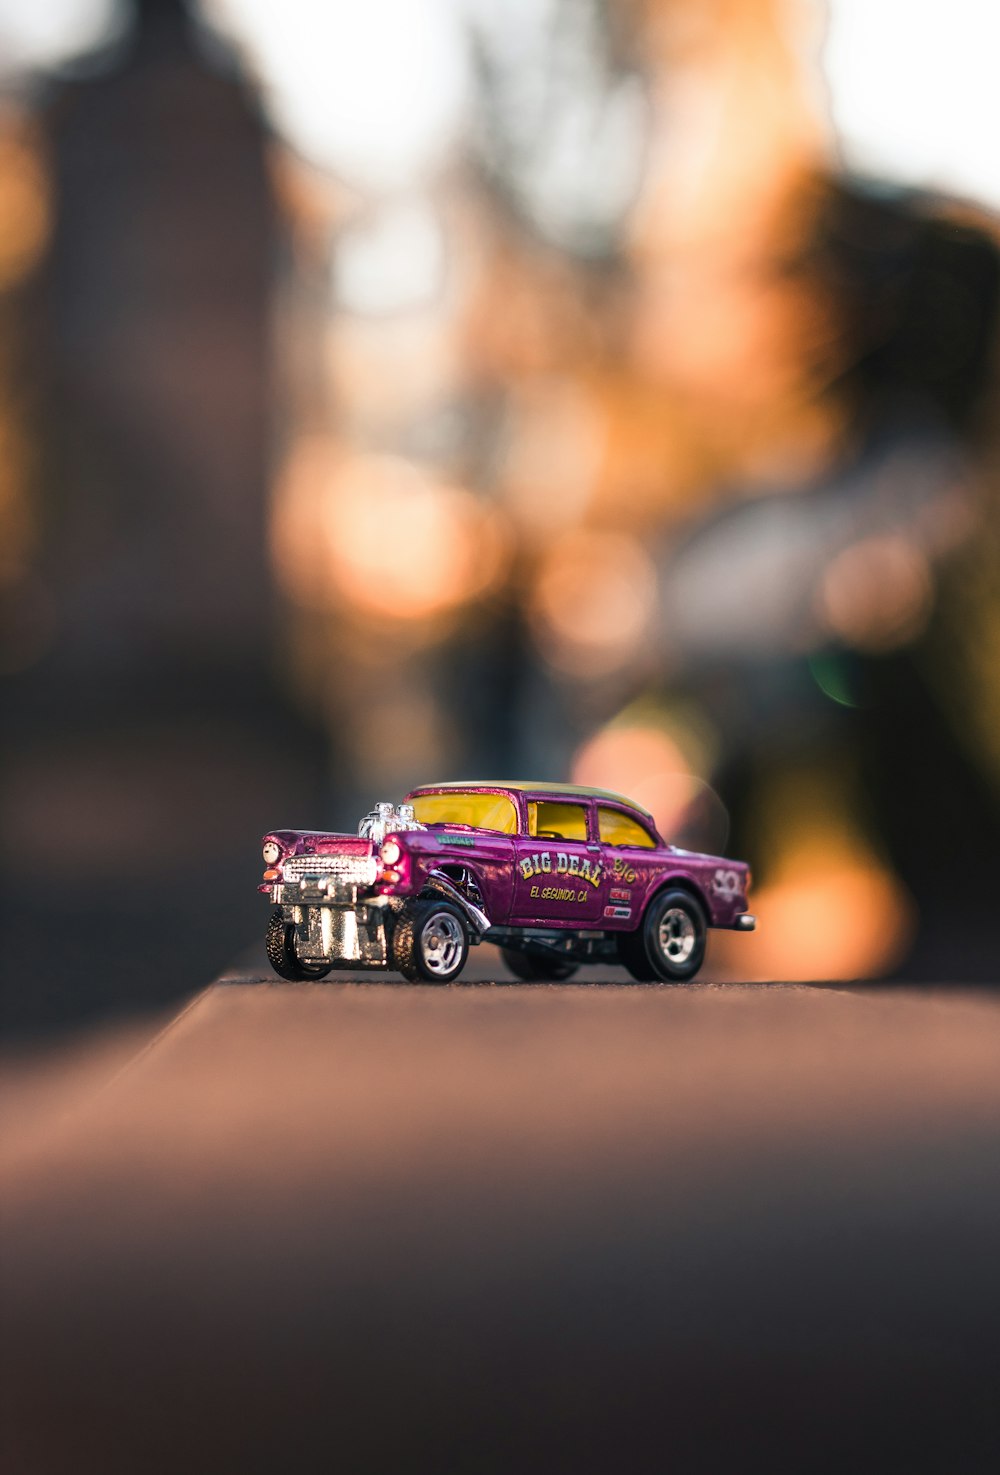 purple car toy scale model